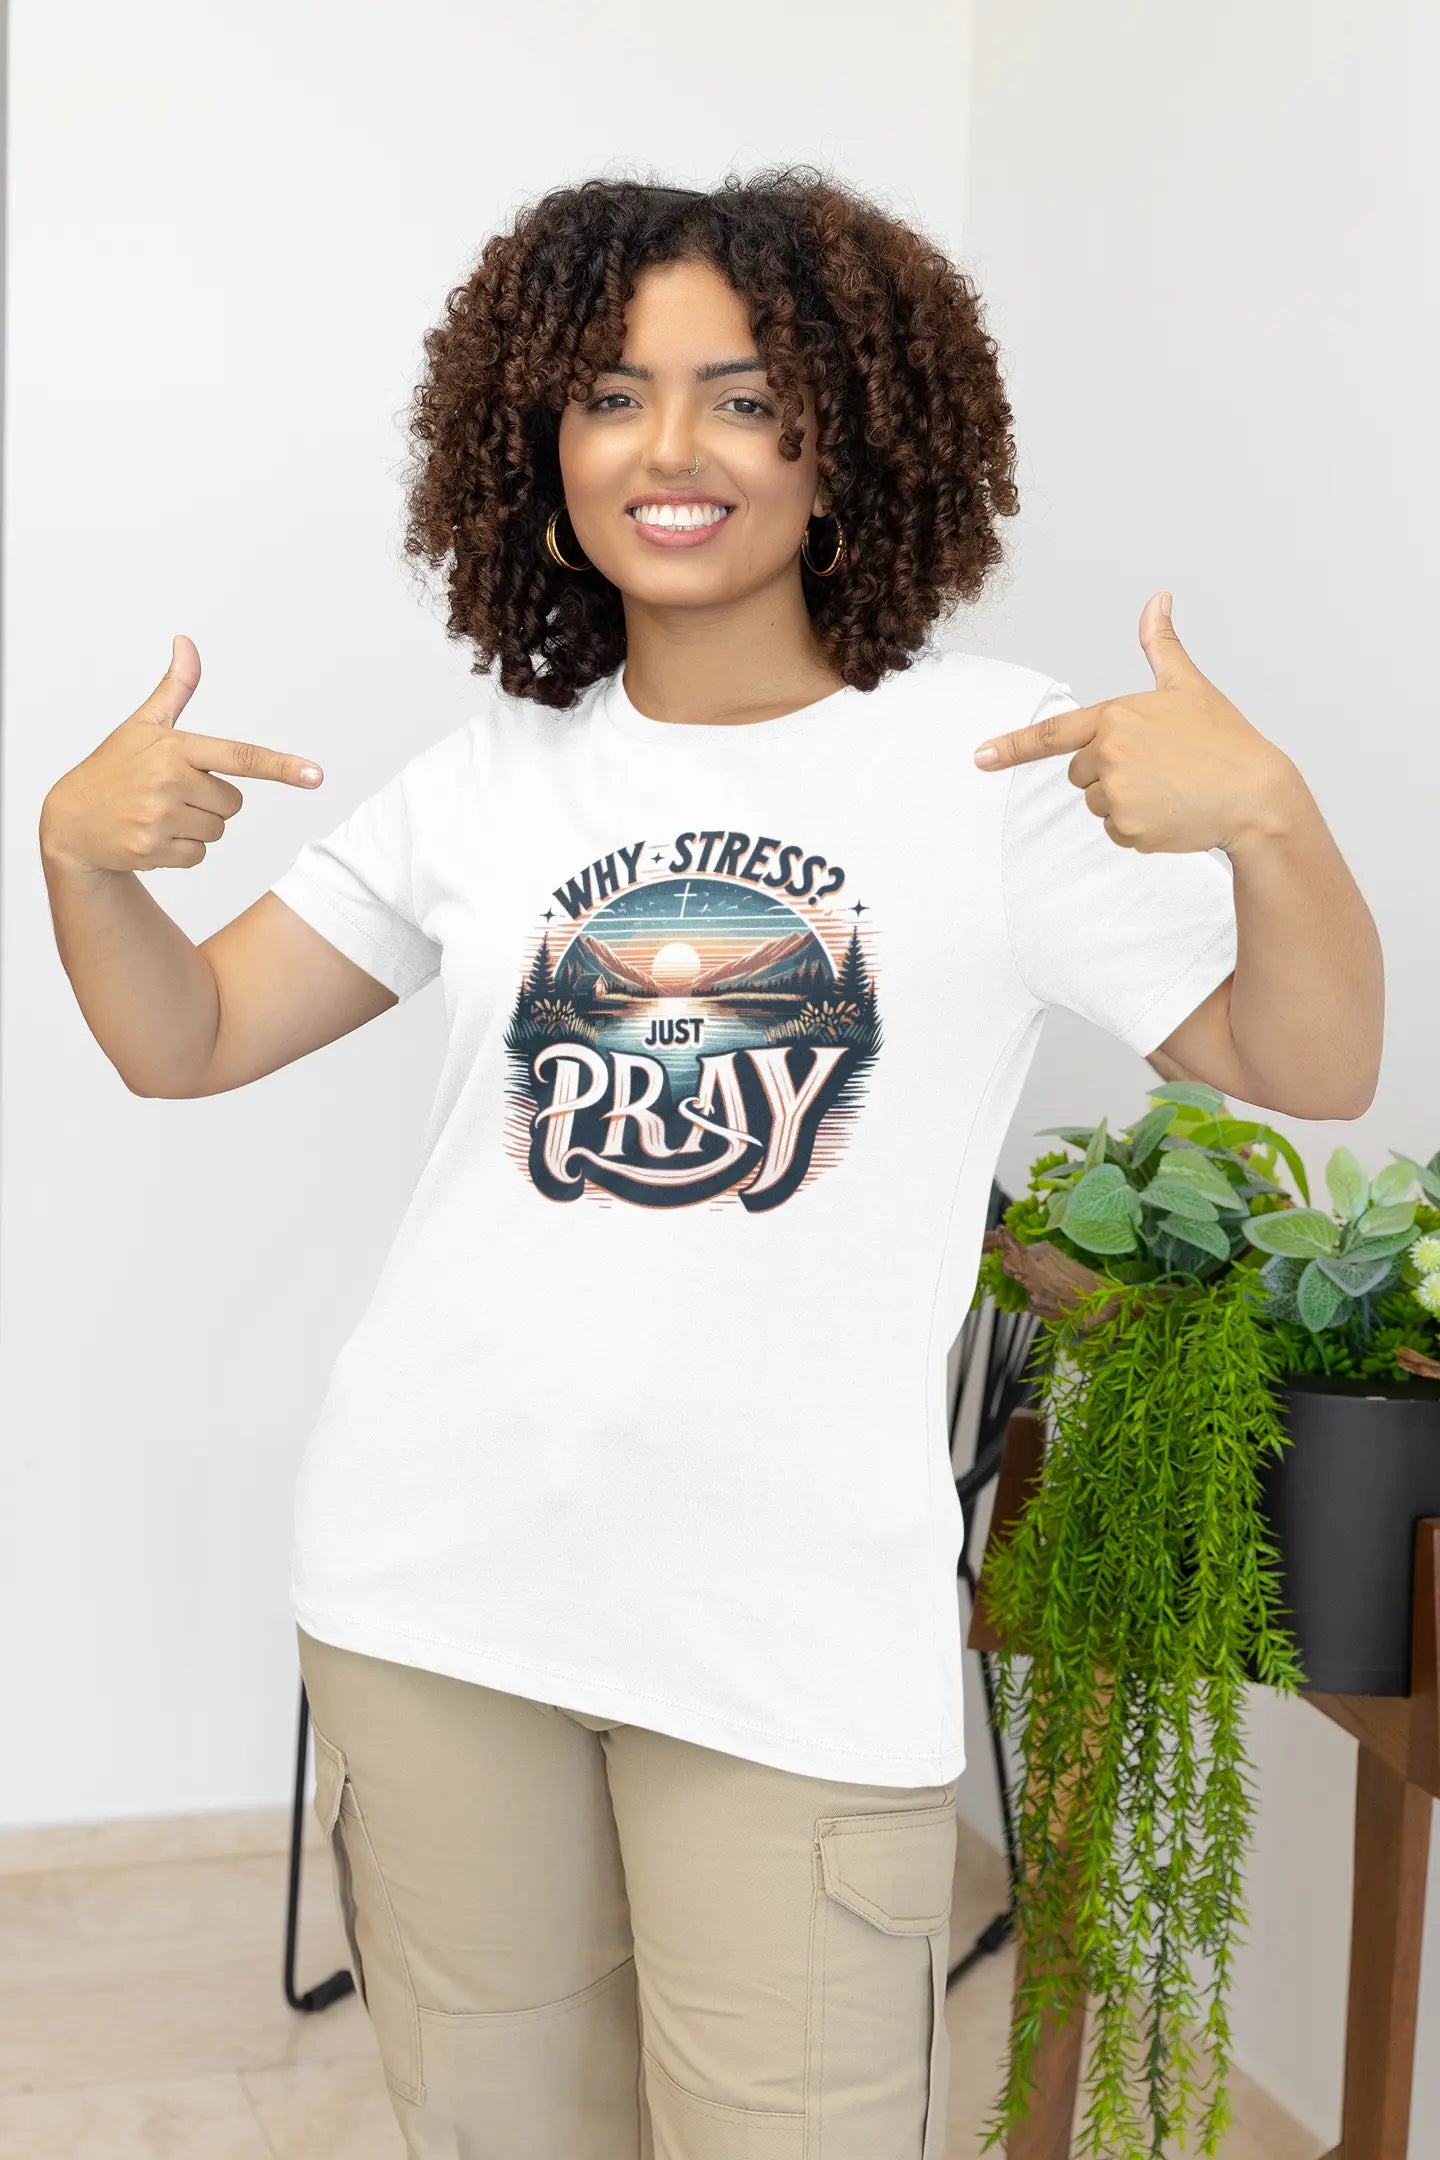 Why Stress? Just Pray! Tee: Faith Over Worry | Grace Based